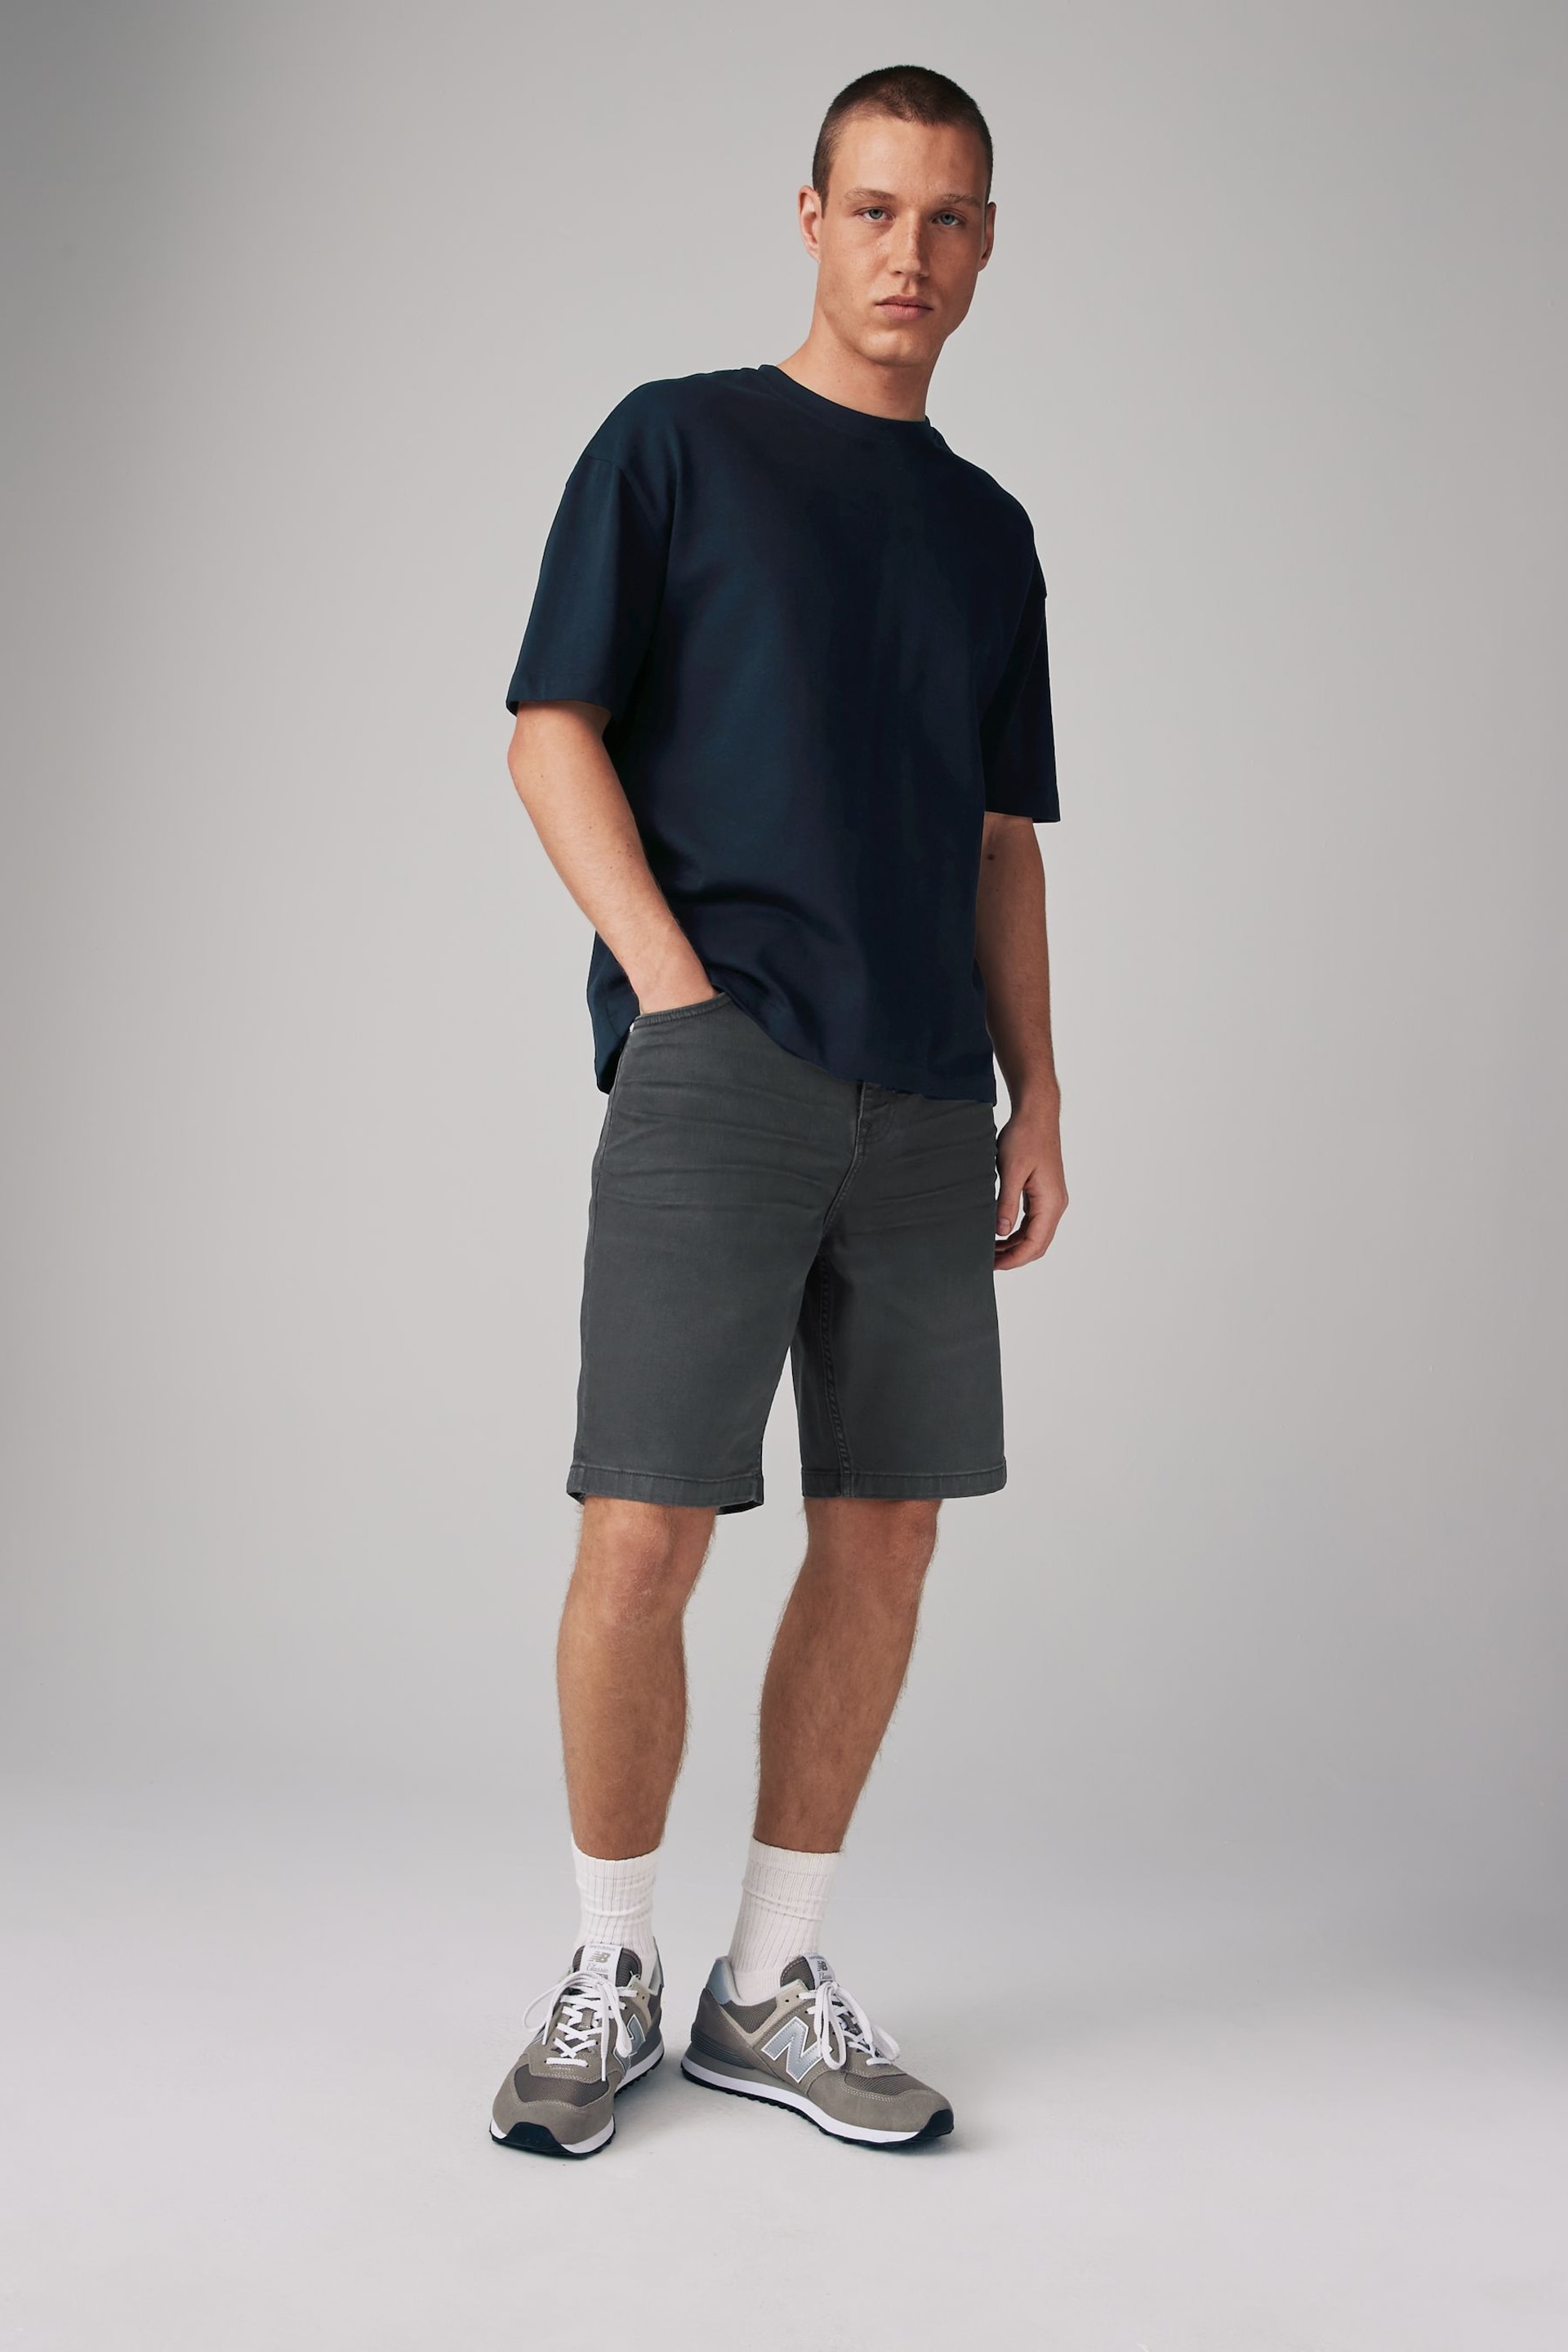 Smoke Grey Garment Dye Denim Shorts - Image 1 of 4